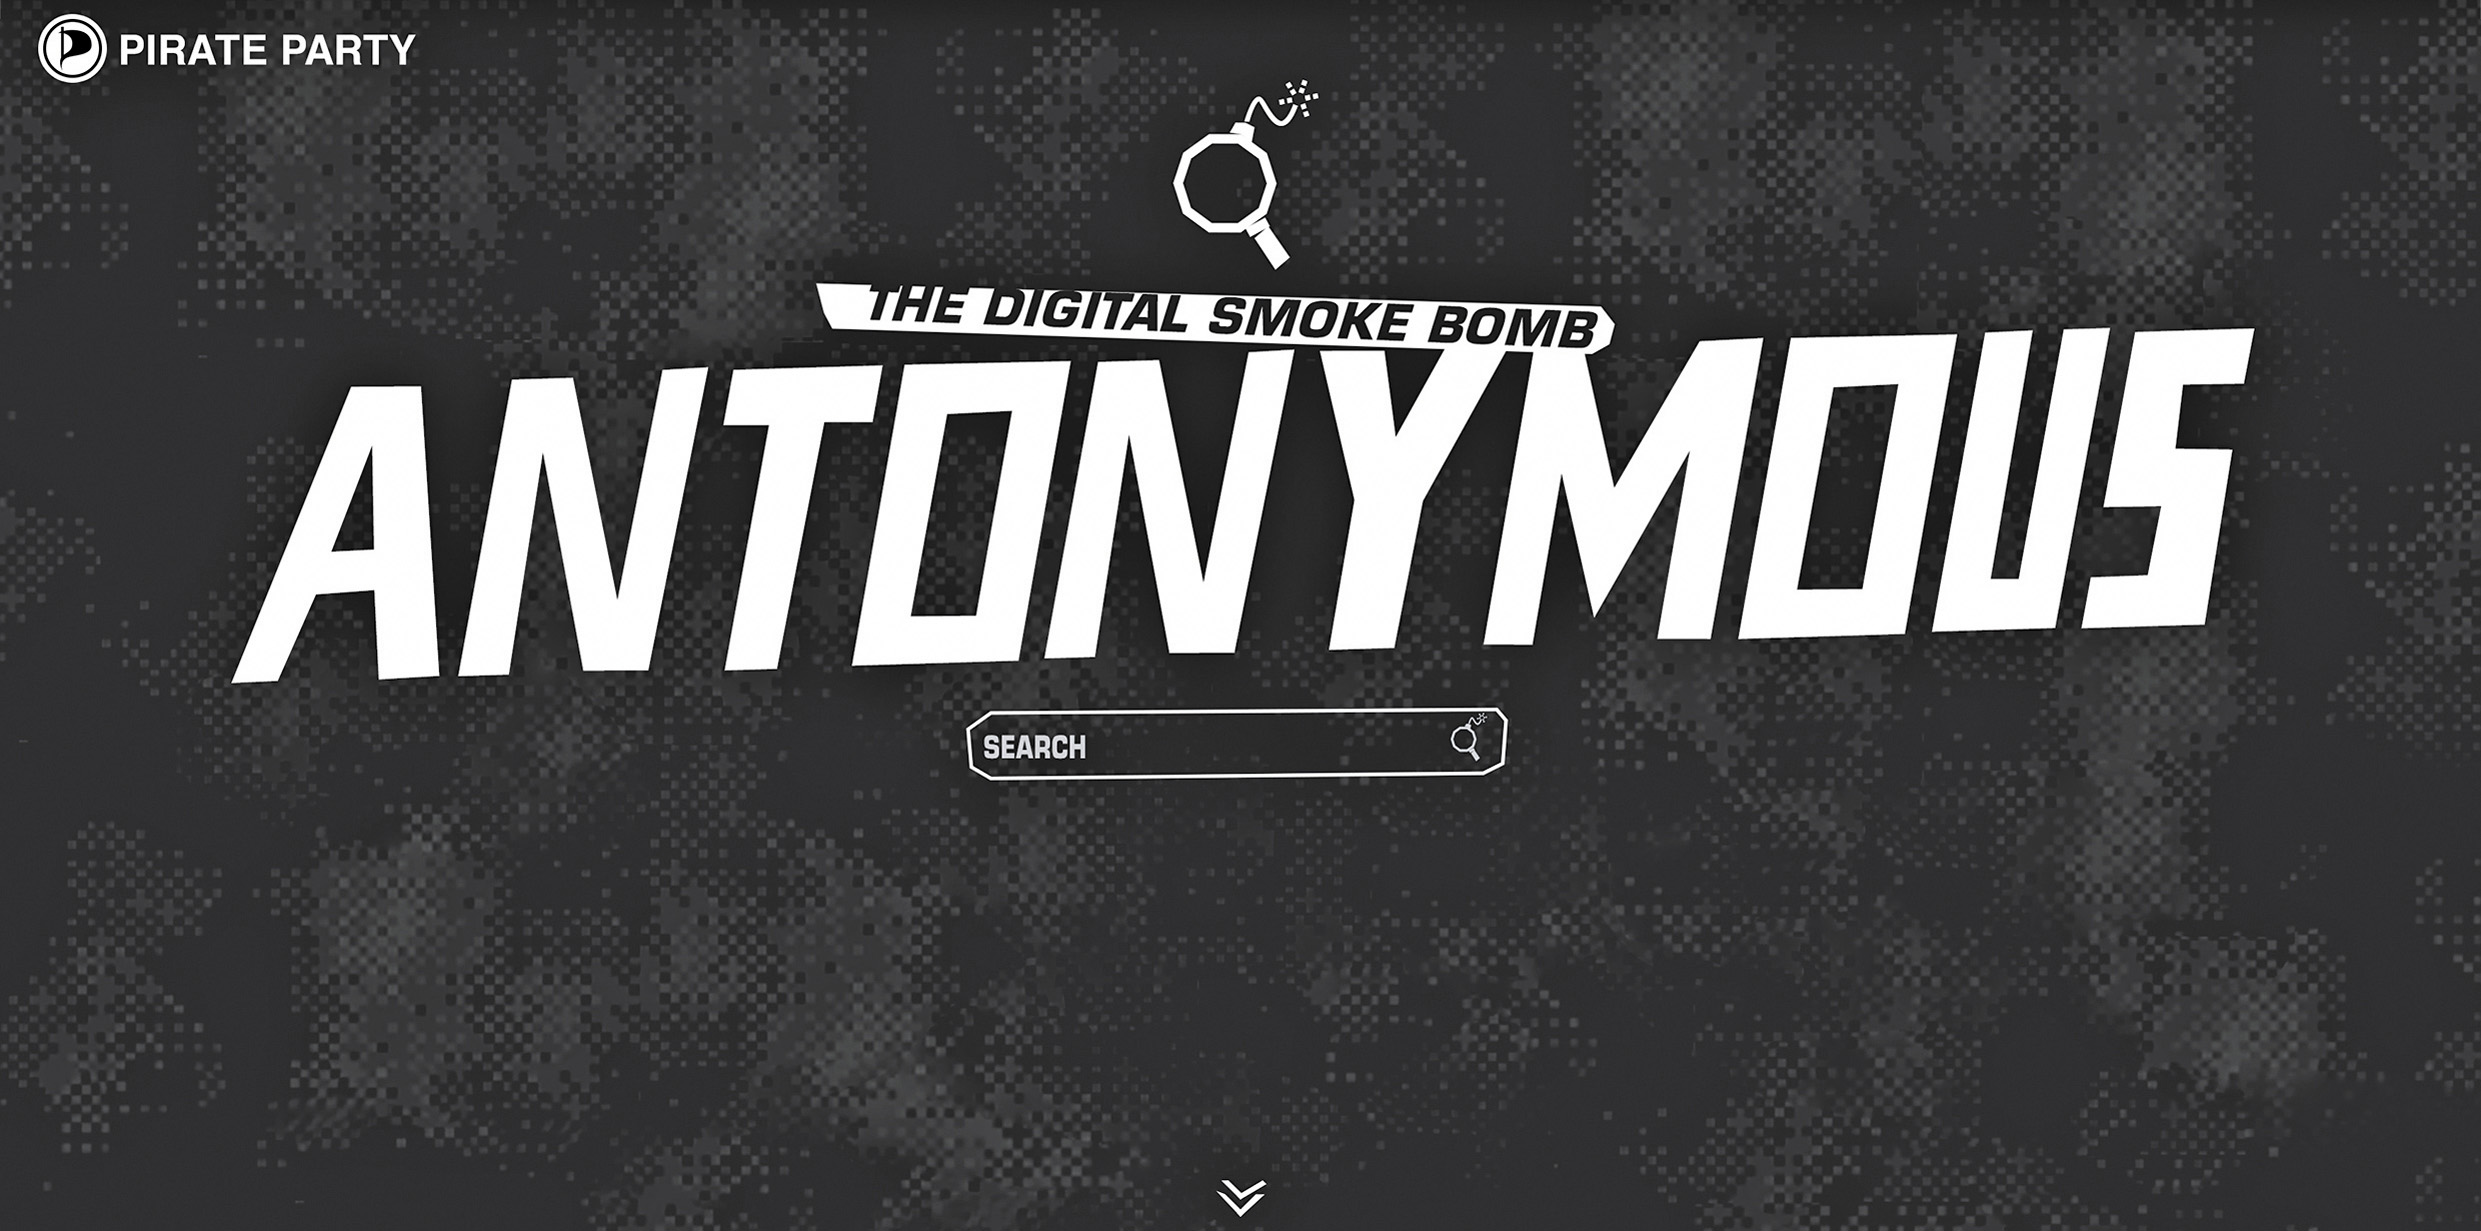 Antonymous – The Digital Smoke Bomb